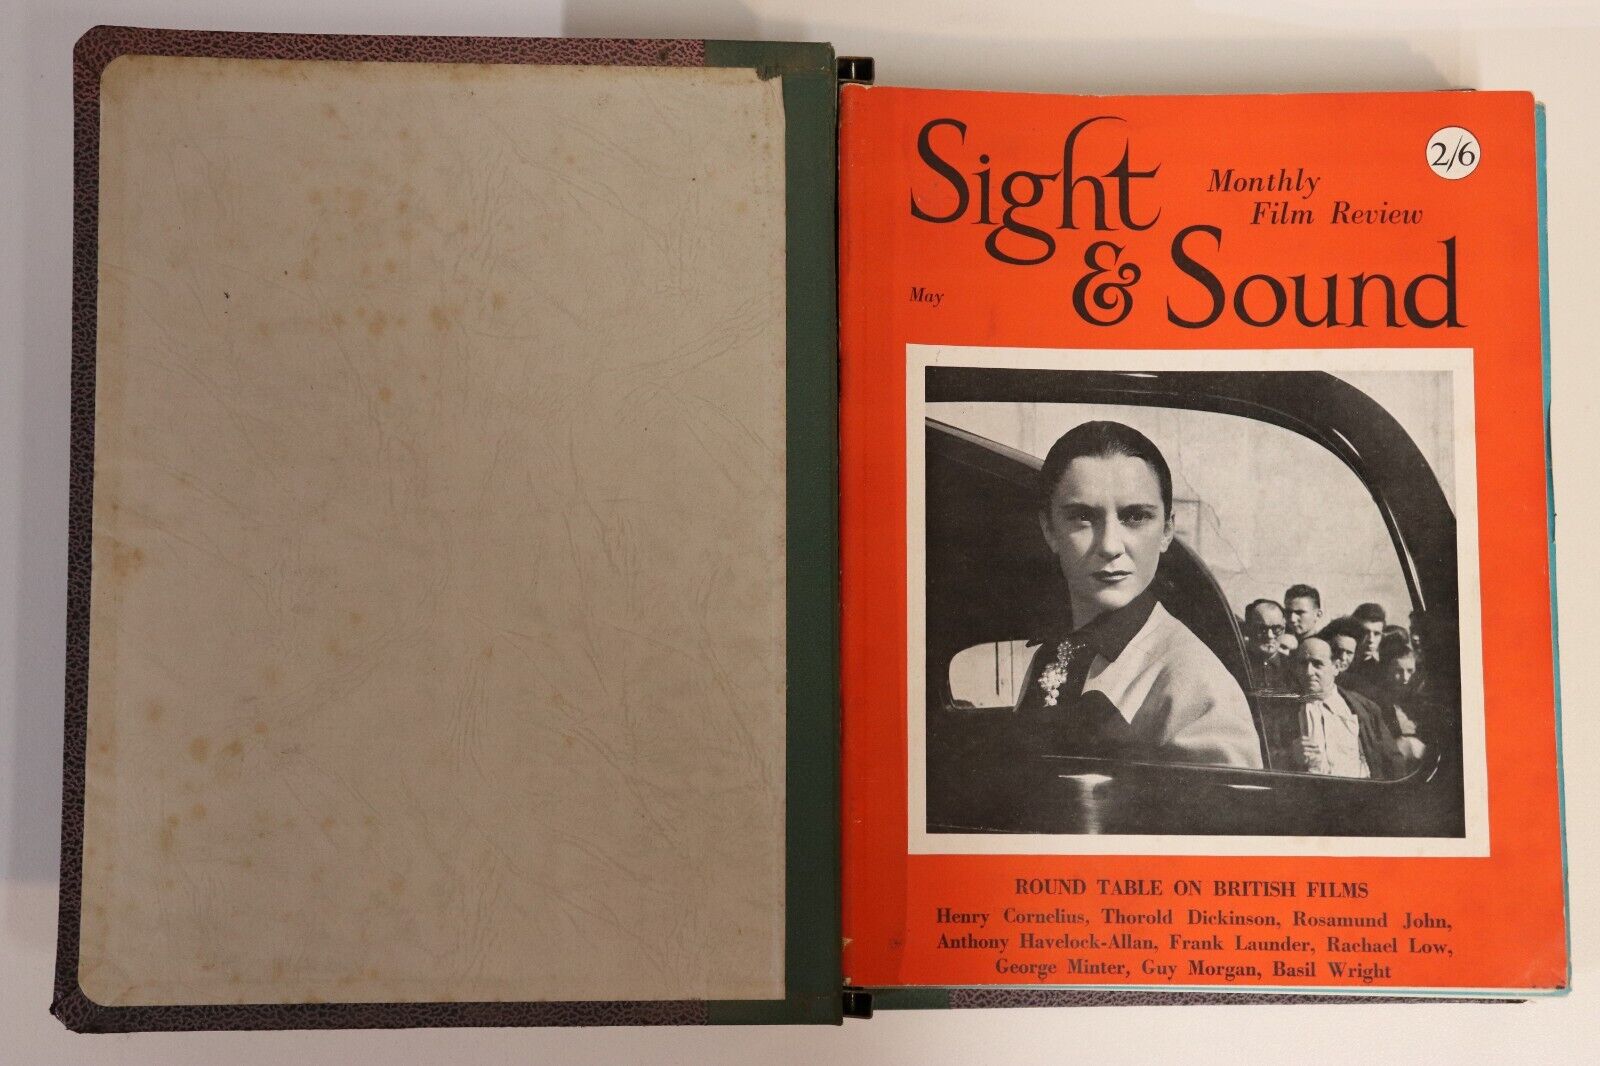 Sight & Sound Film Review Magazine - 1950 to 1954 - Vintage Film History Books - 0